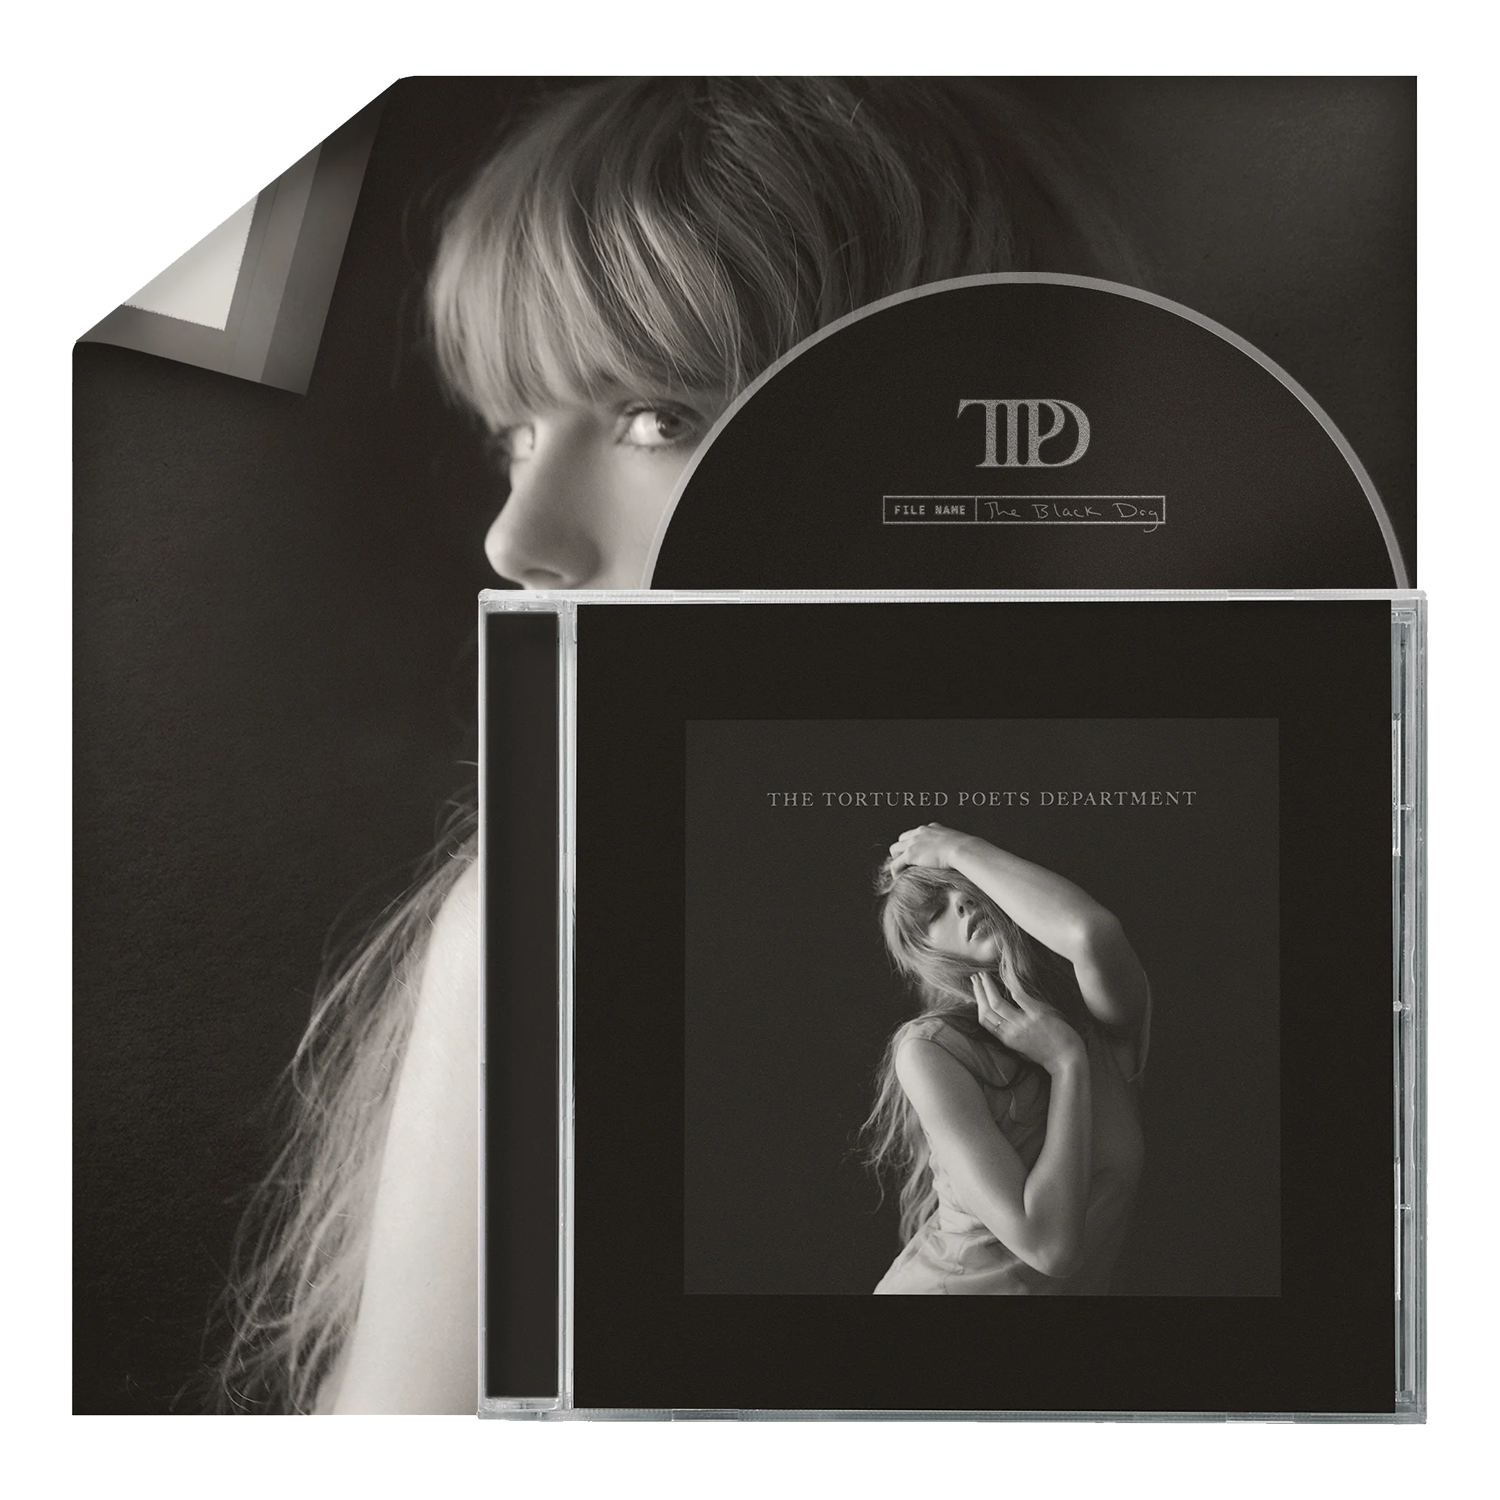 Taylor Swift - The Tortured Poets Department CD + Bonus Track “The Black Dog”